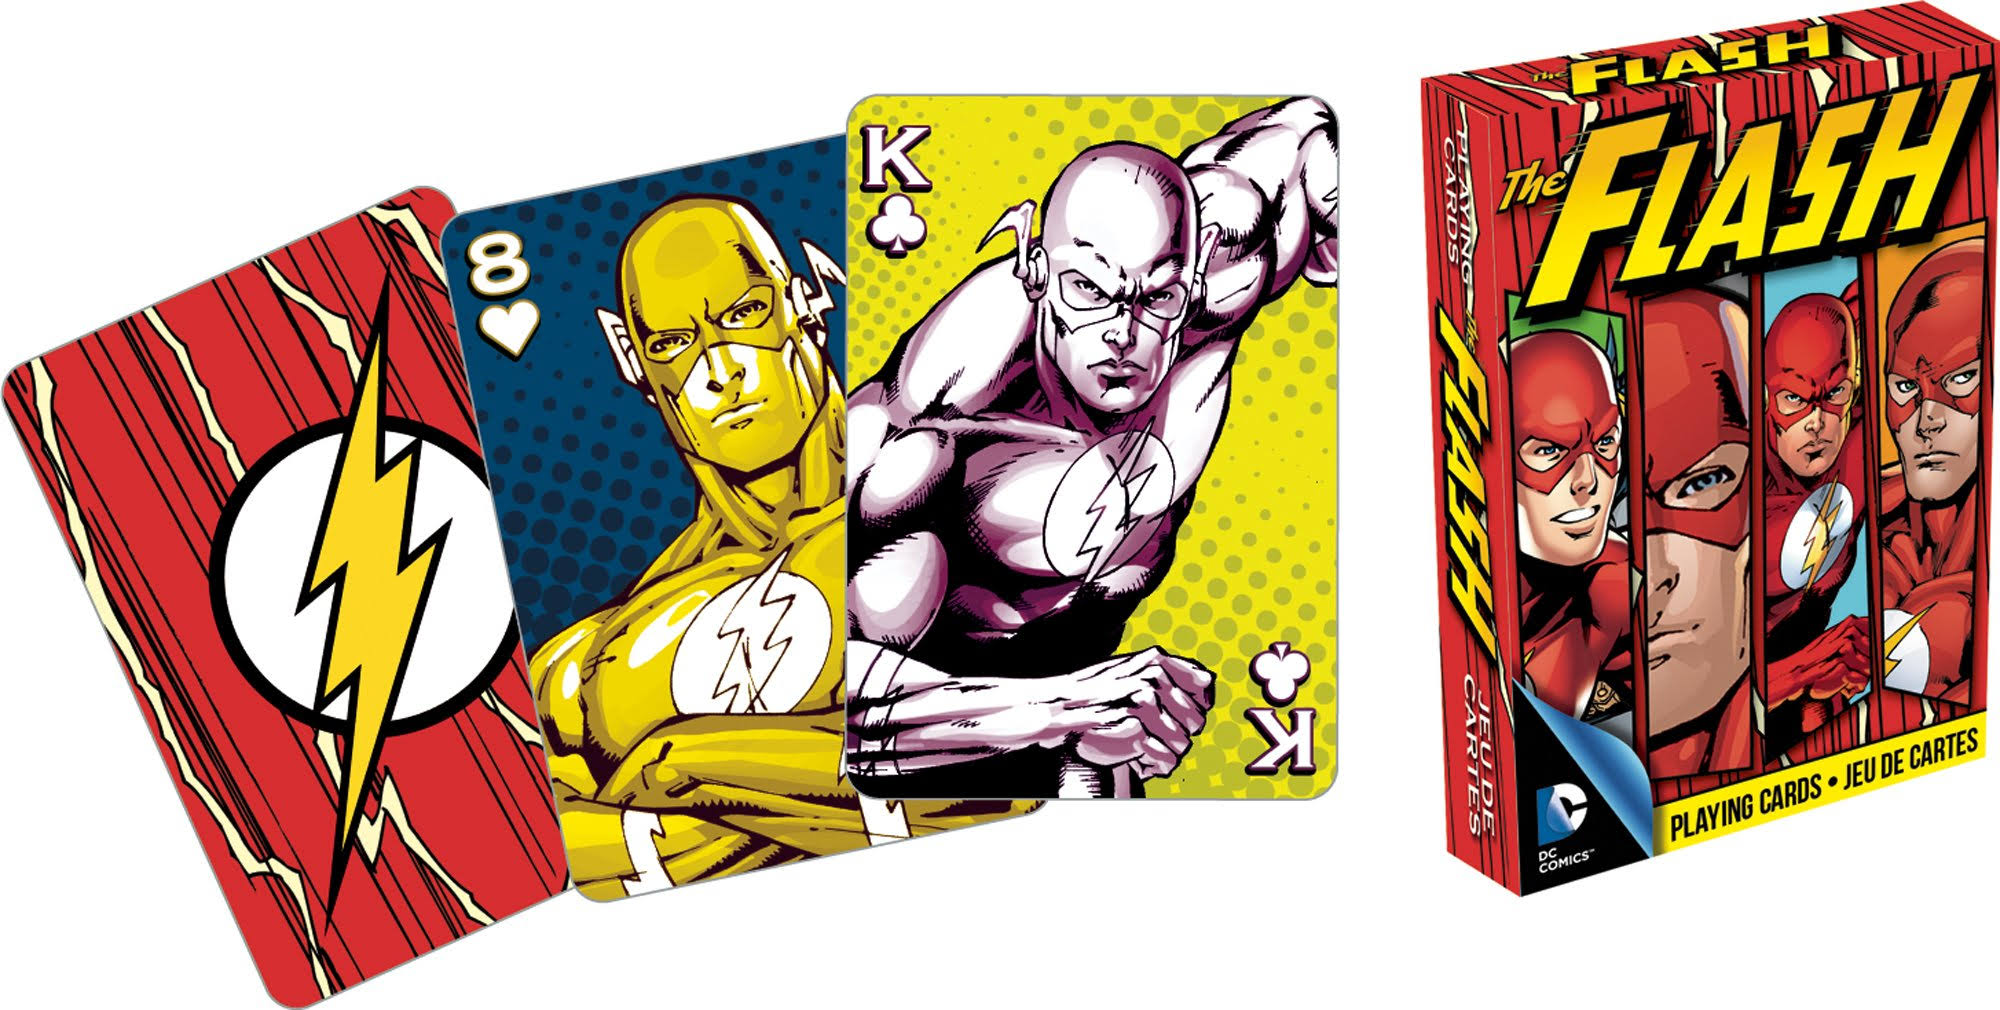 Aquarius DC Comics Playing Cards - The Flash